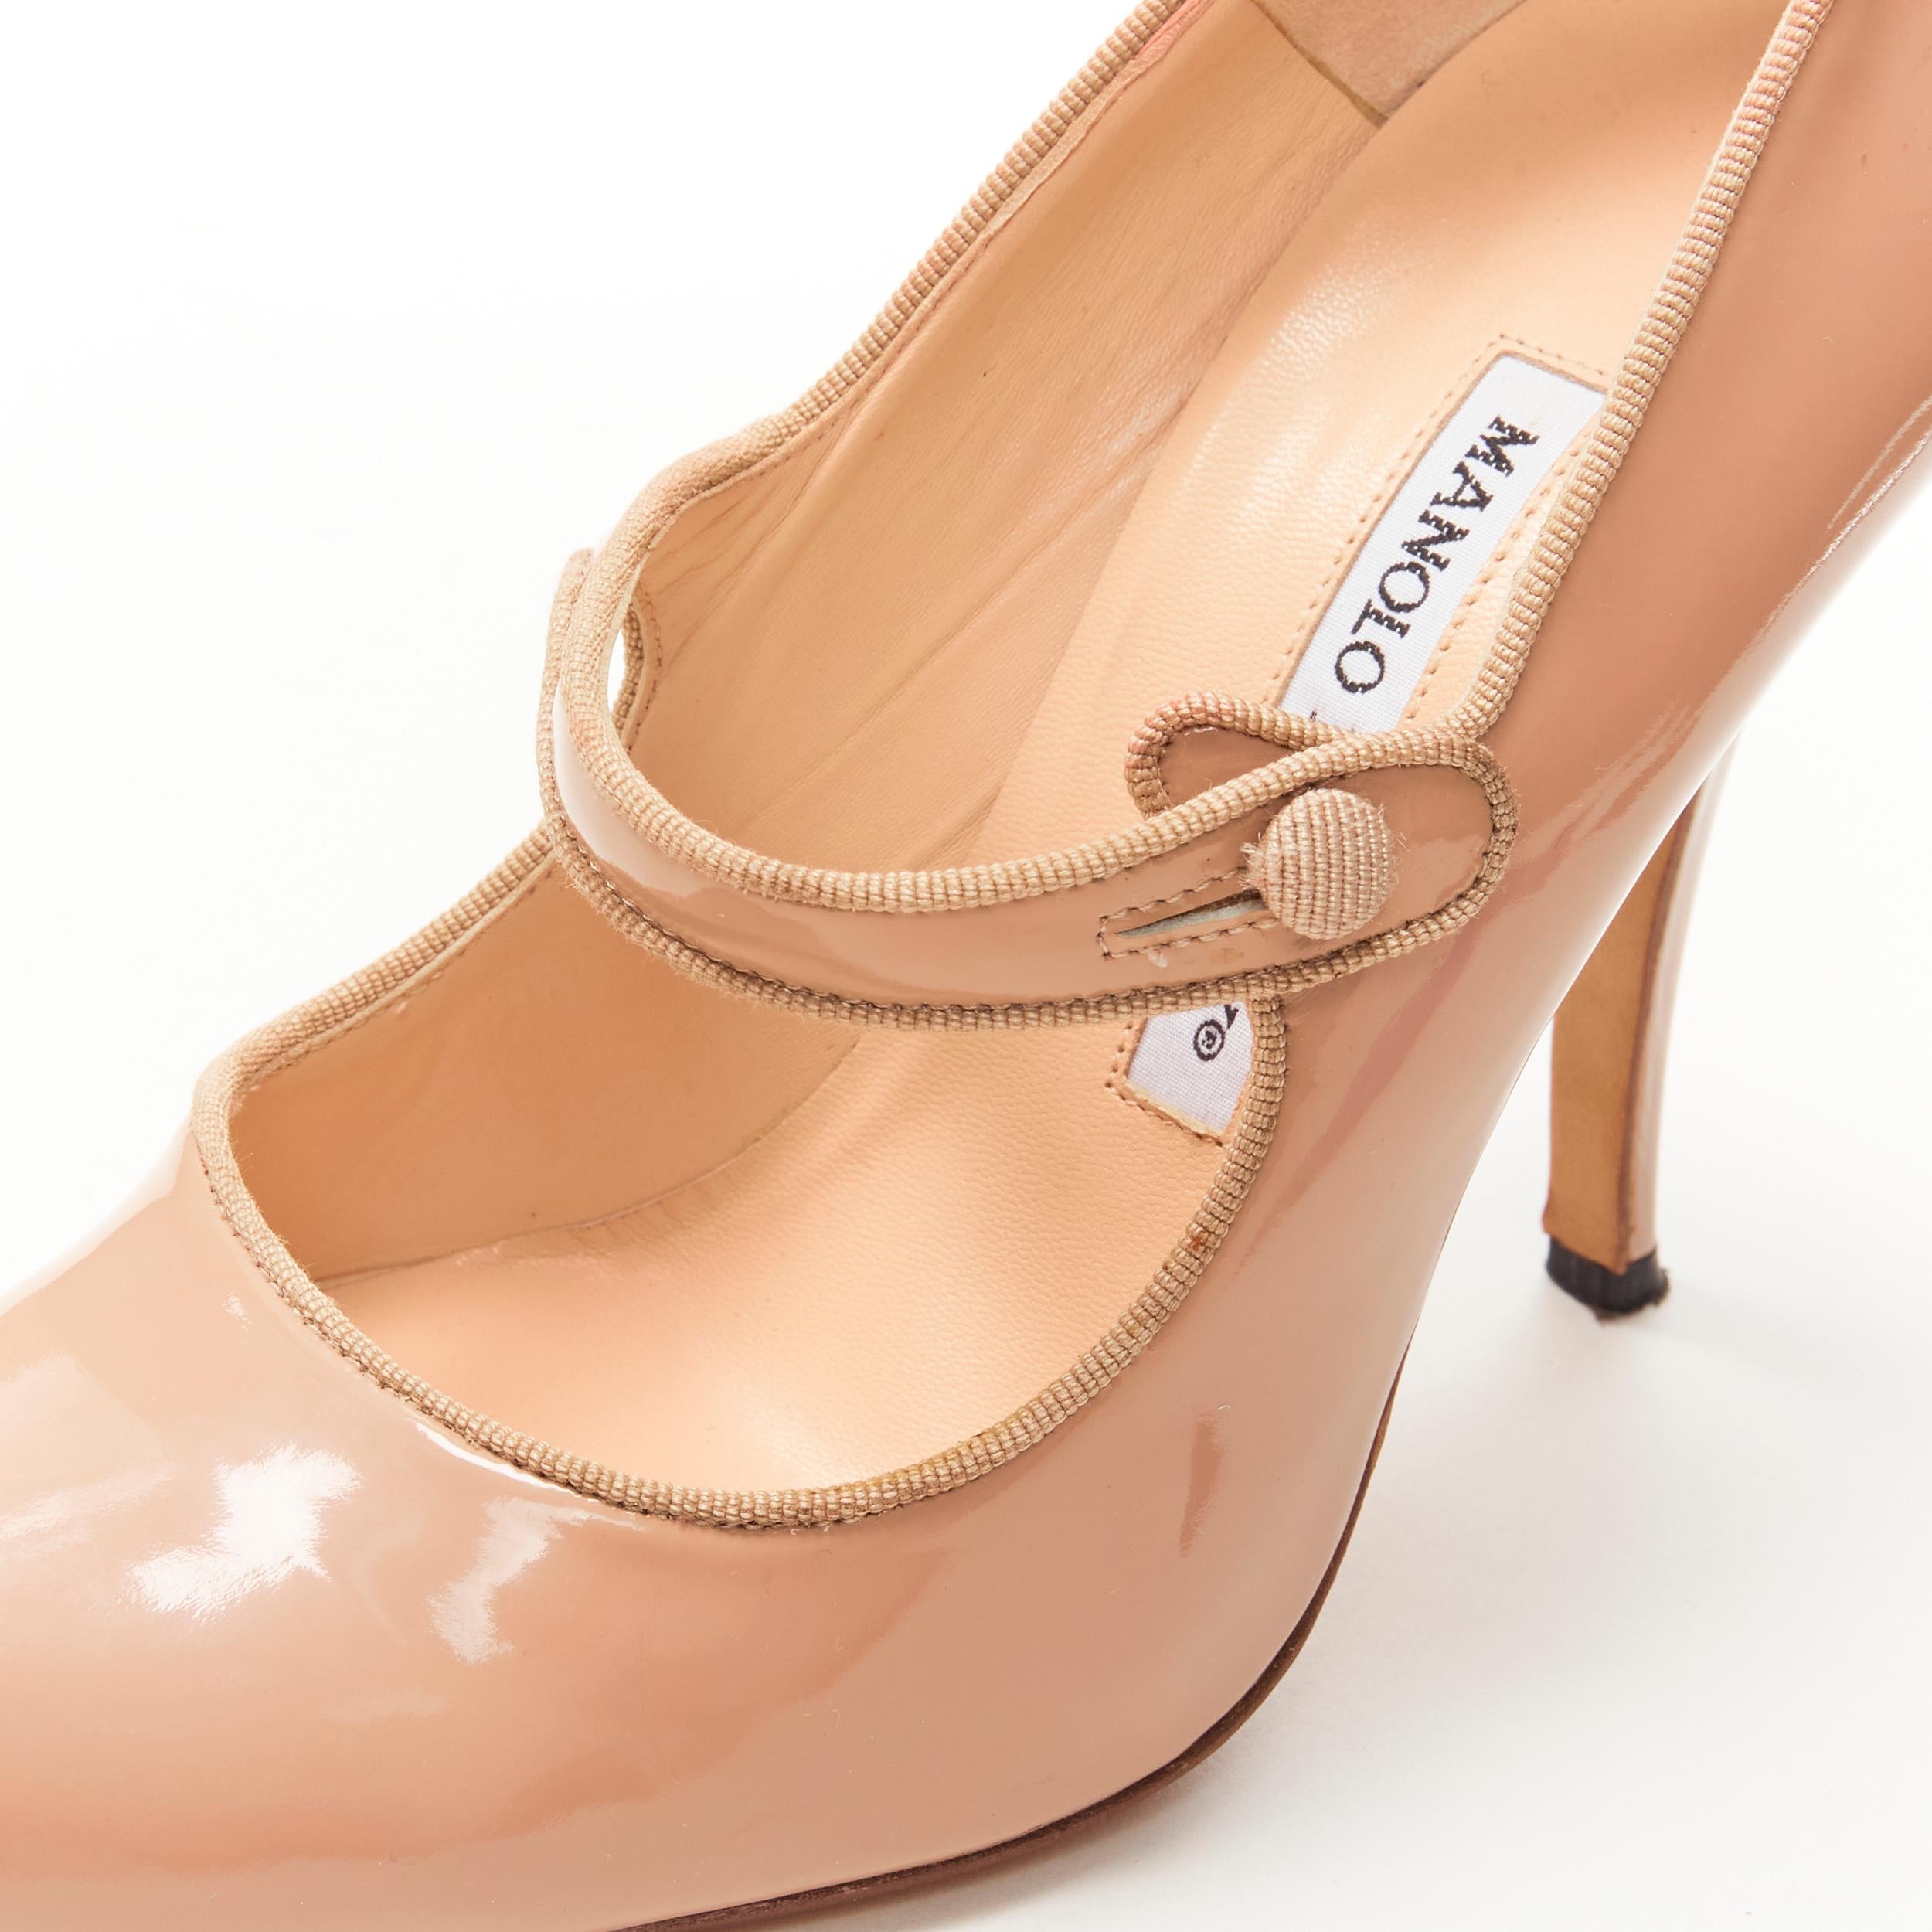 Women's MANOLO BLAHNIK nude patent Campari 105 Mary Jane curved heel pump EU37.5